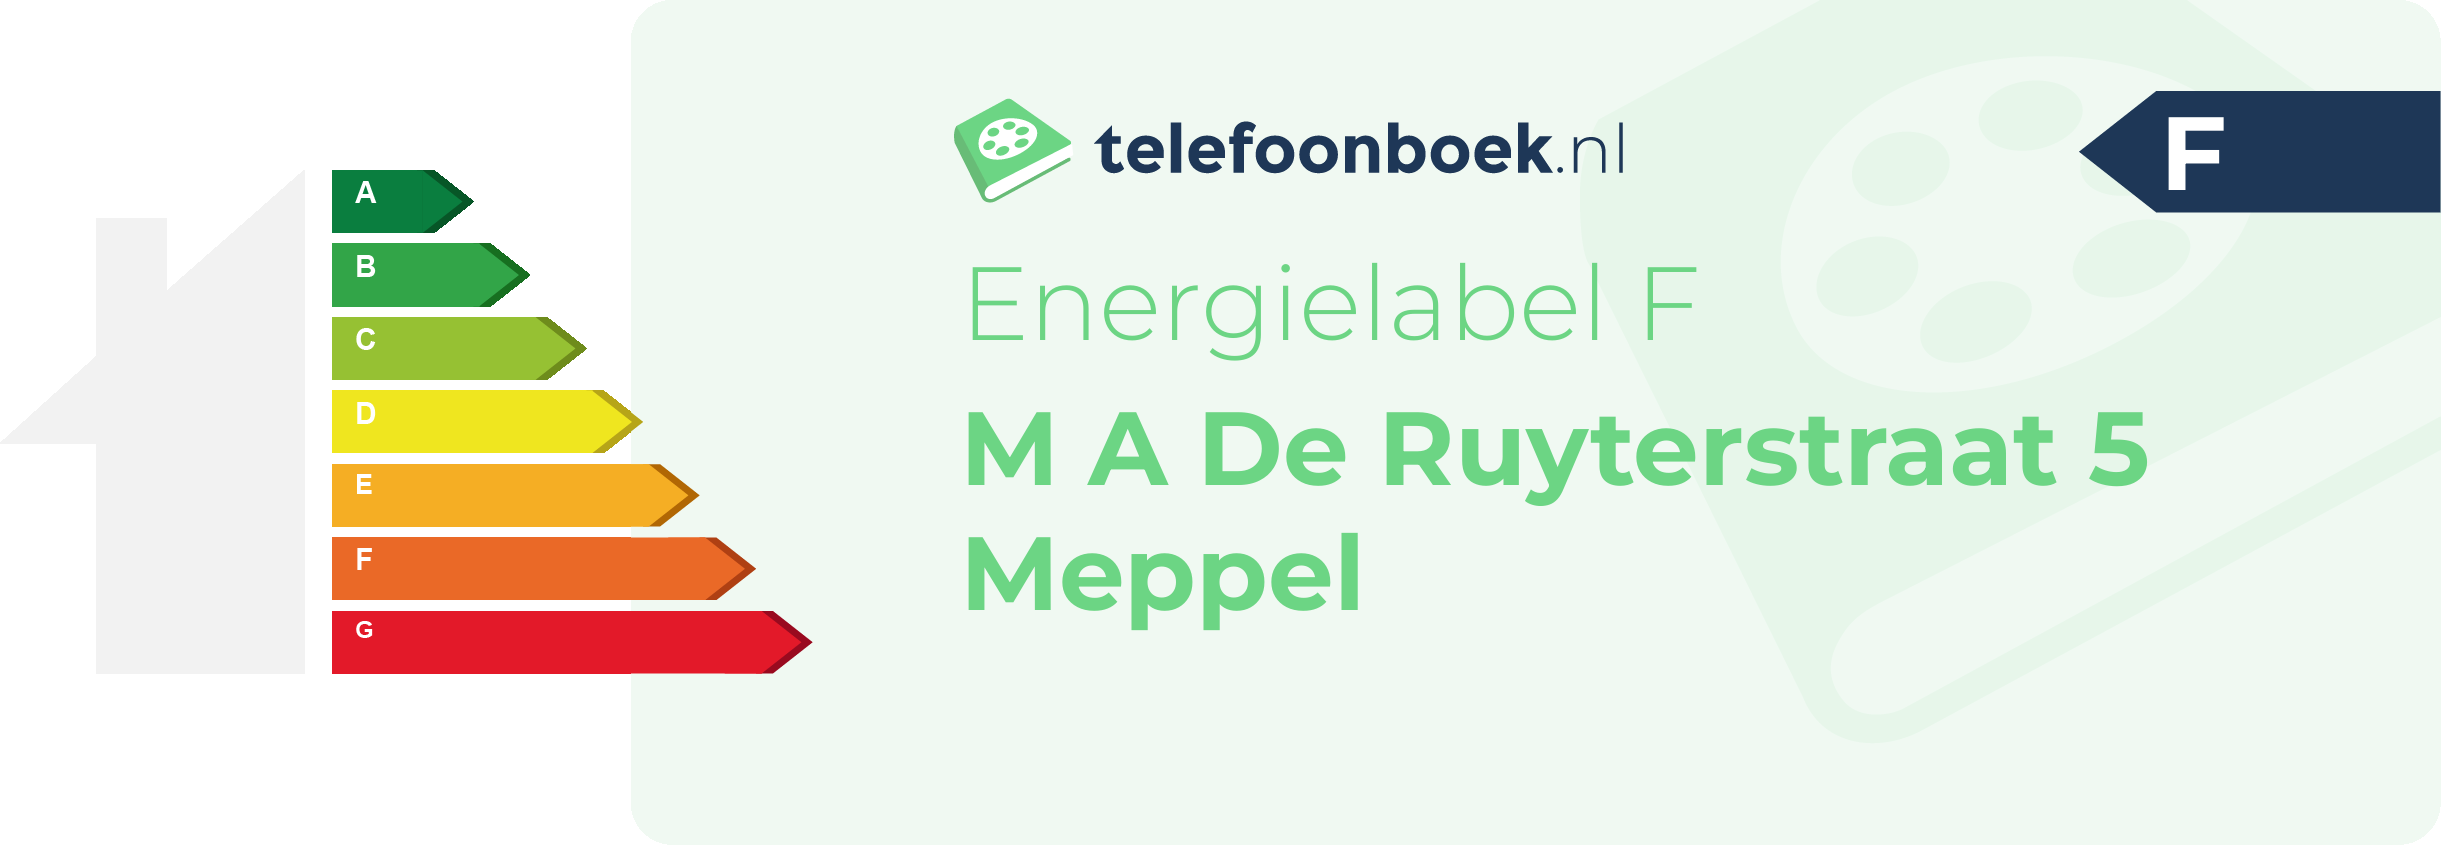 Energielabel M A De Ruyterstraat 5 Meppel